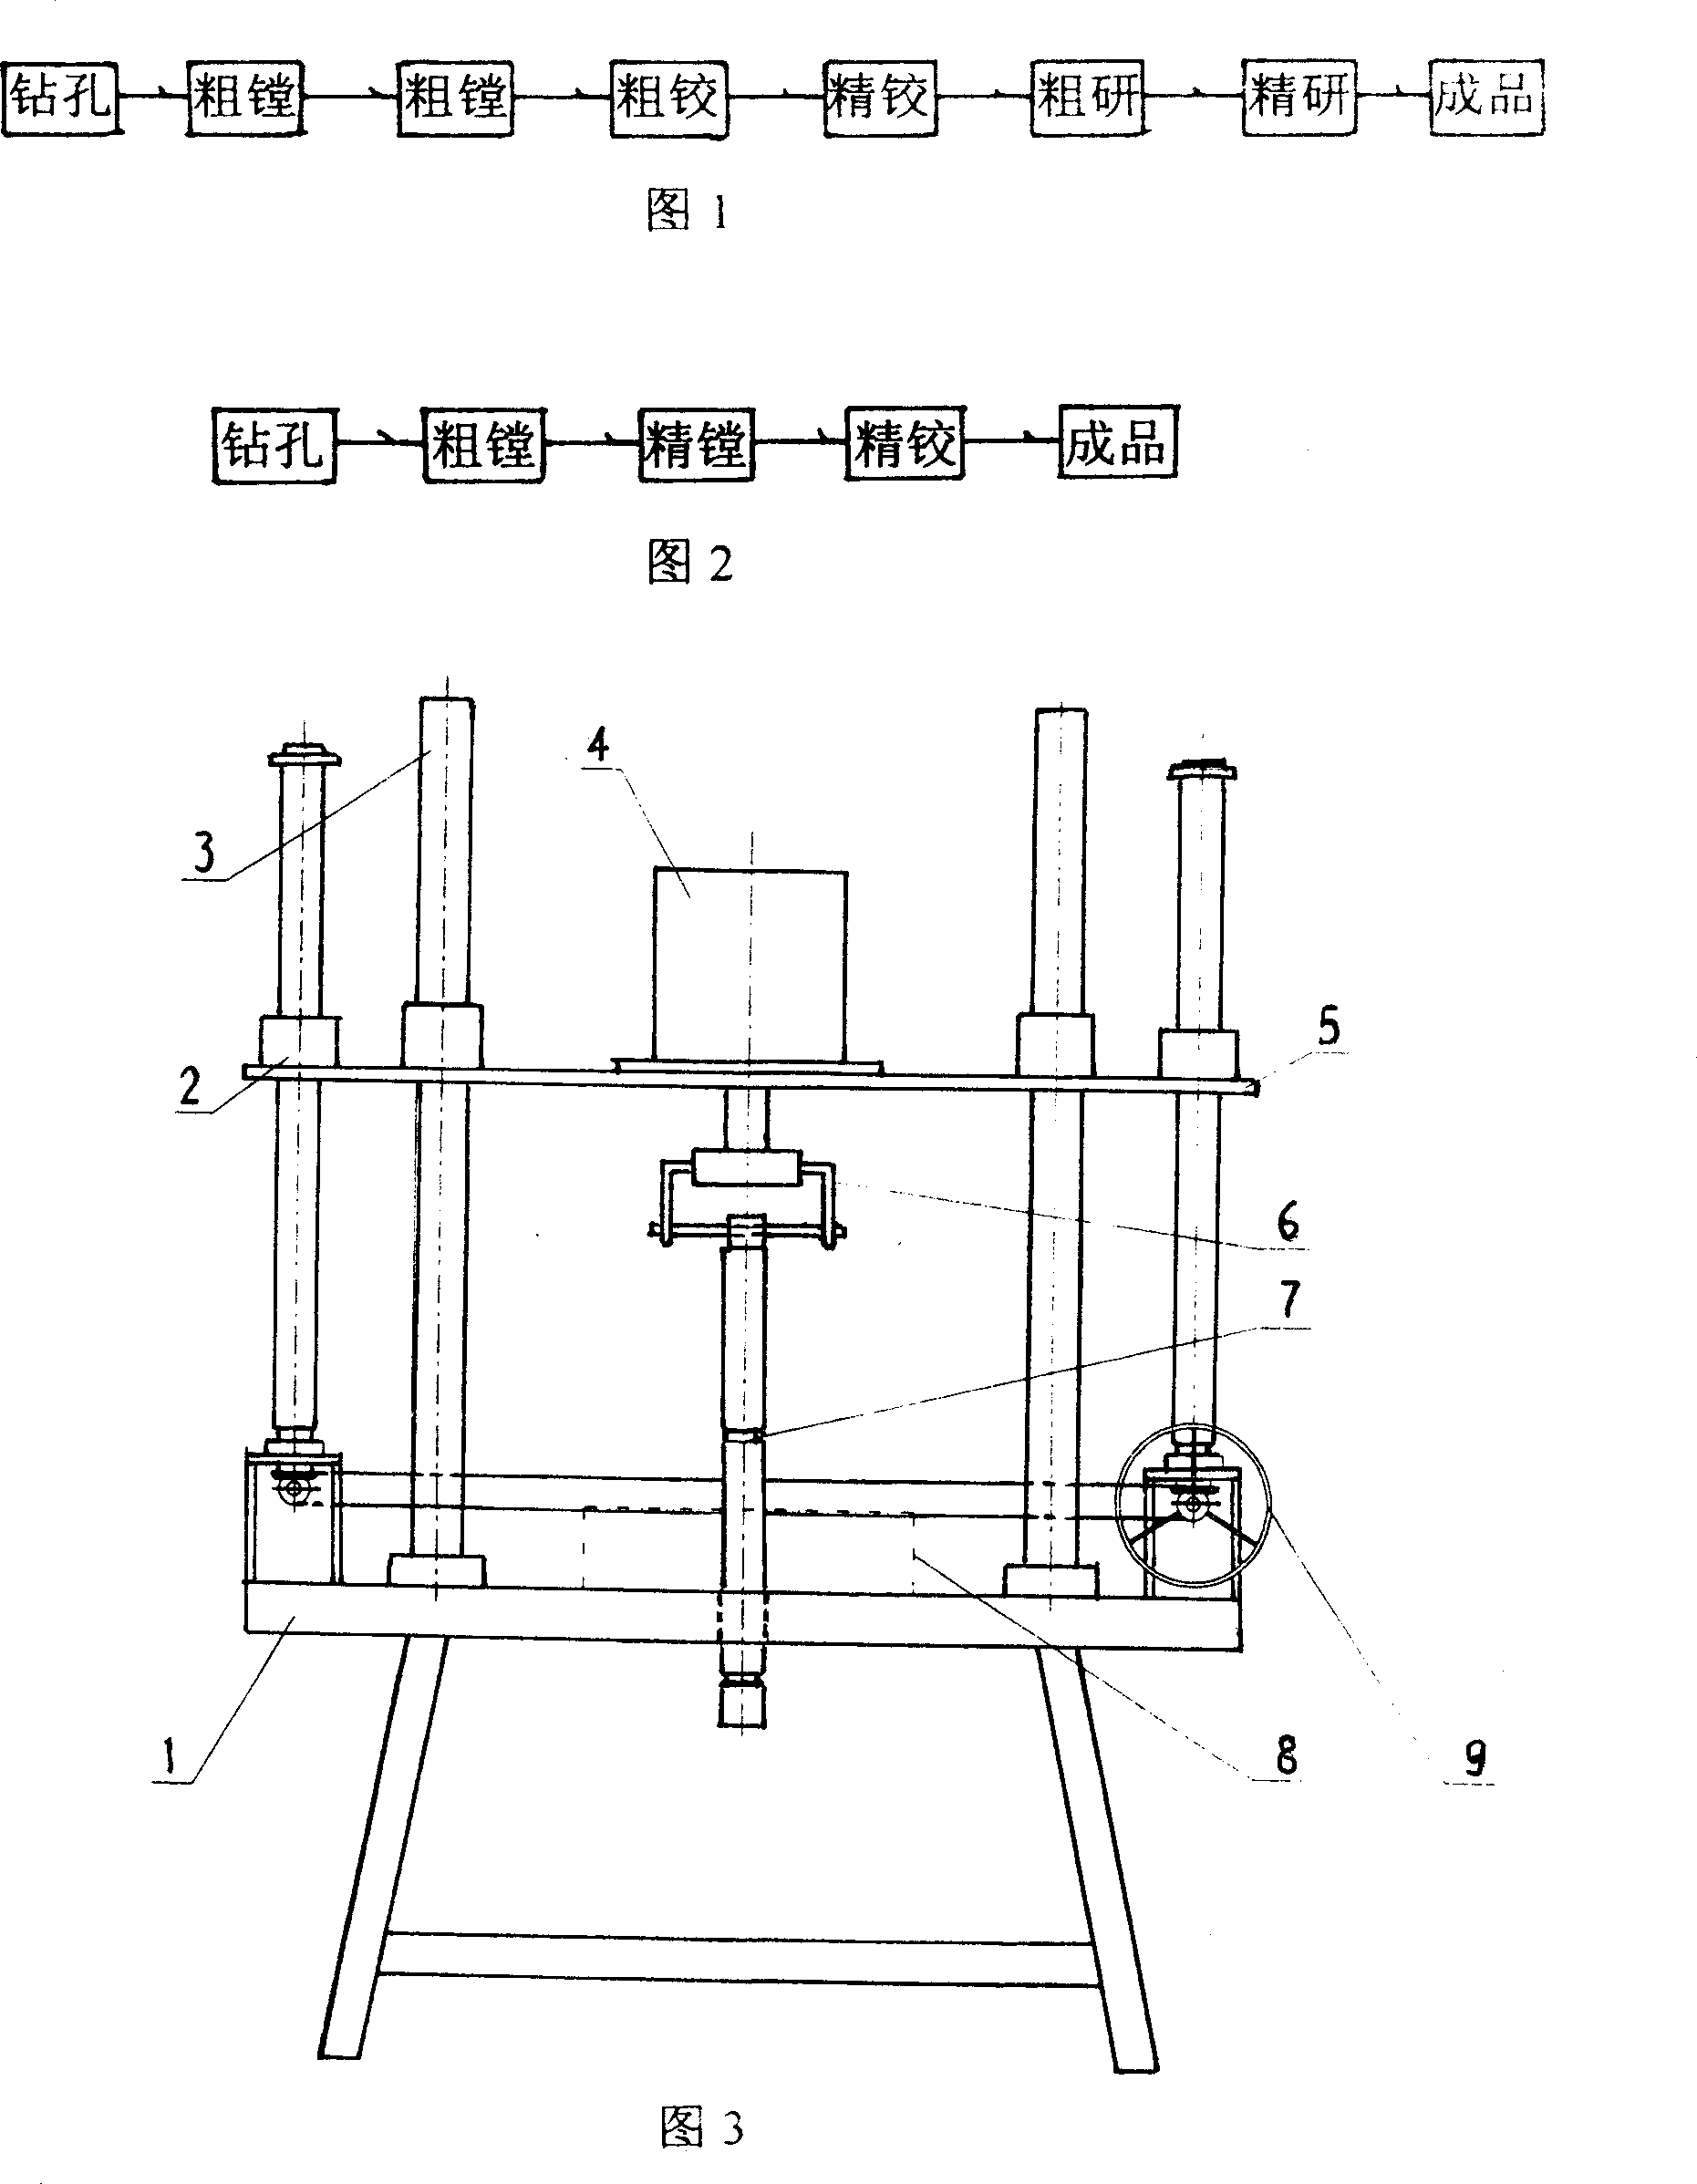 Hydraulic through-hole processing method and apparatus